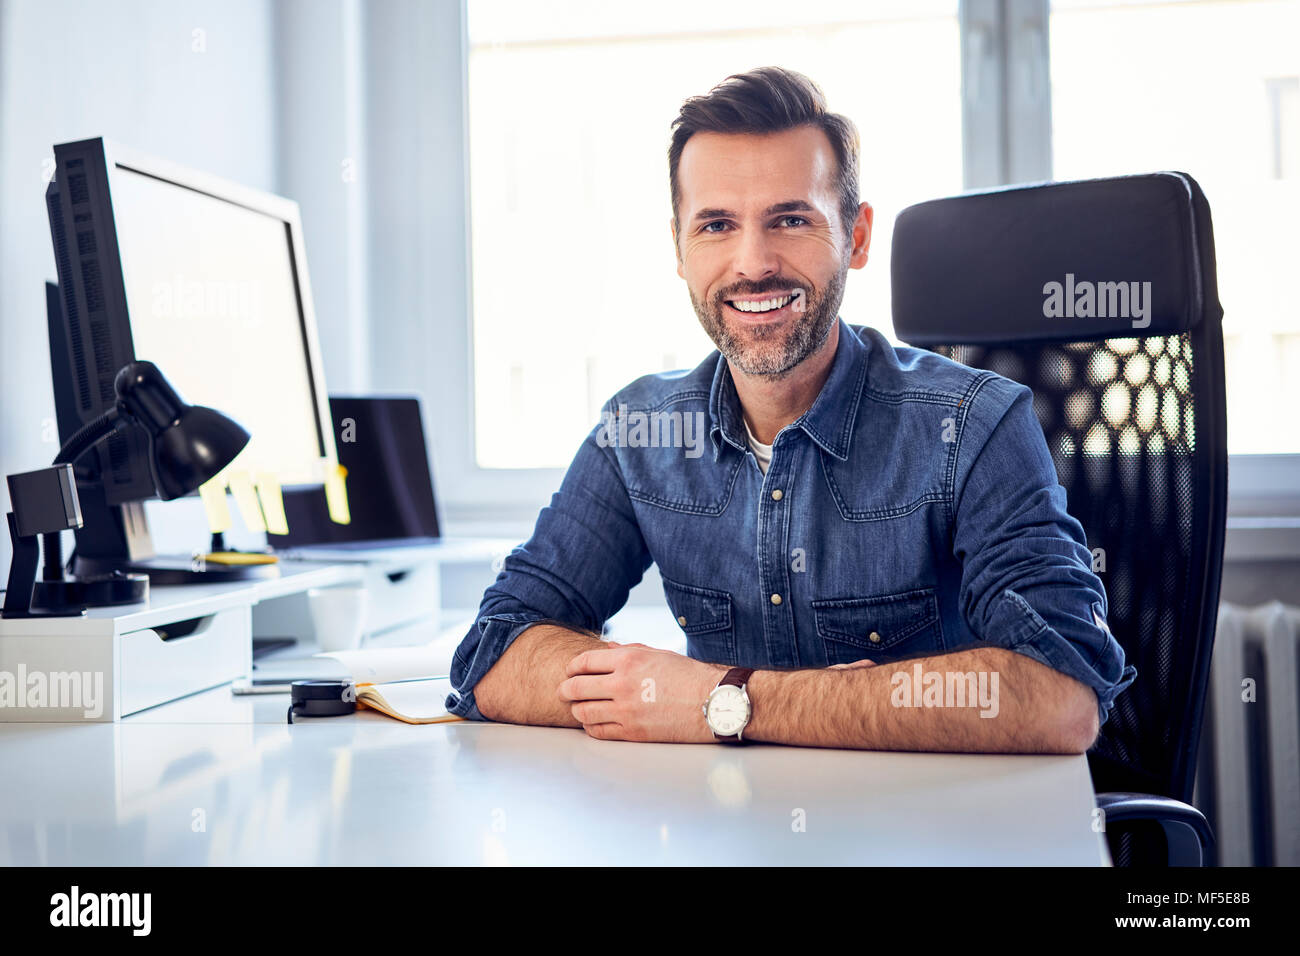 https://c8.alamy.com/comp/MF5E8B/portrait-of-smiling-man-sitting-at-desk-in-office-MF5E8B.jpg